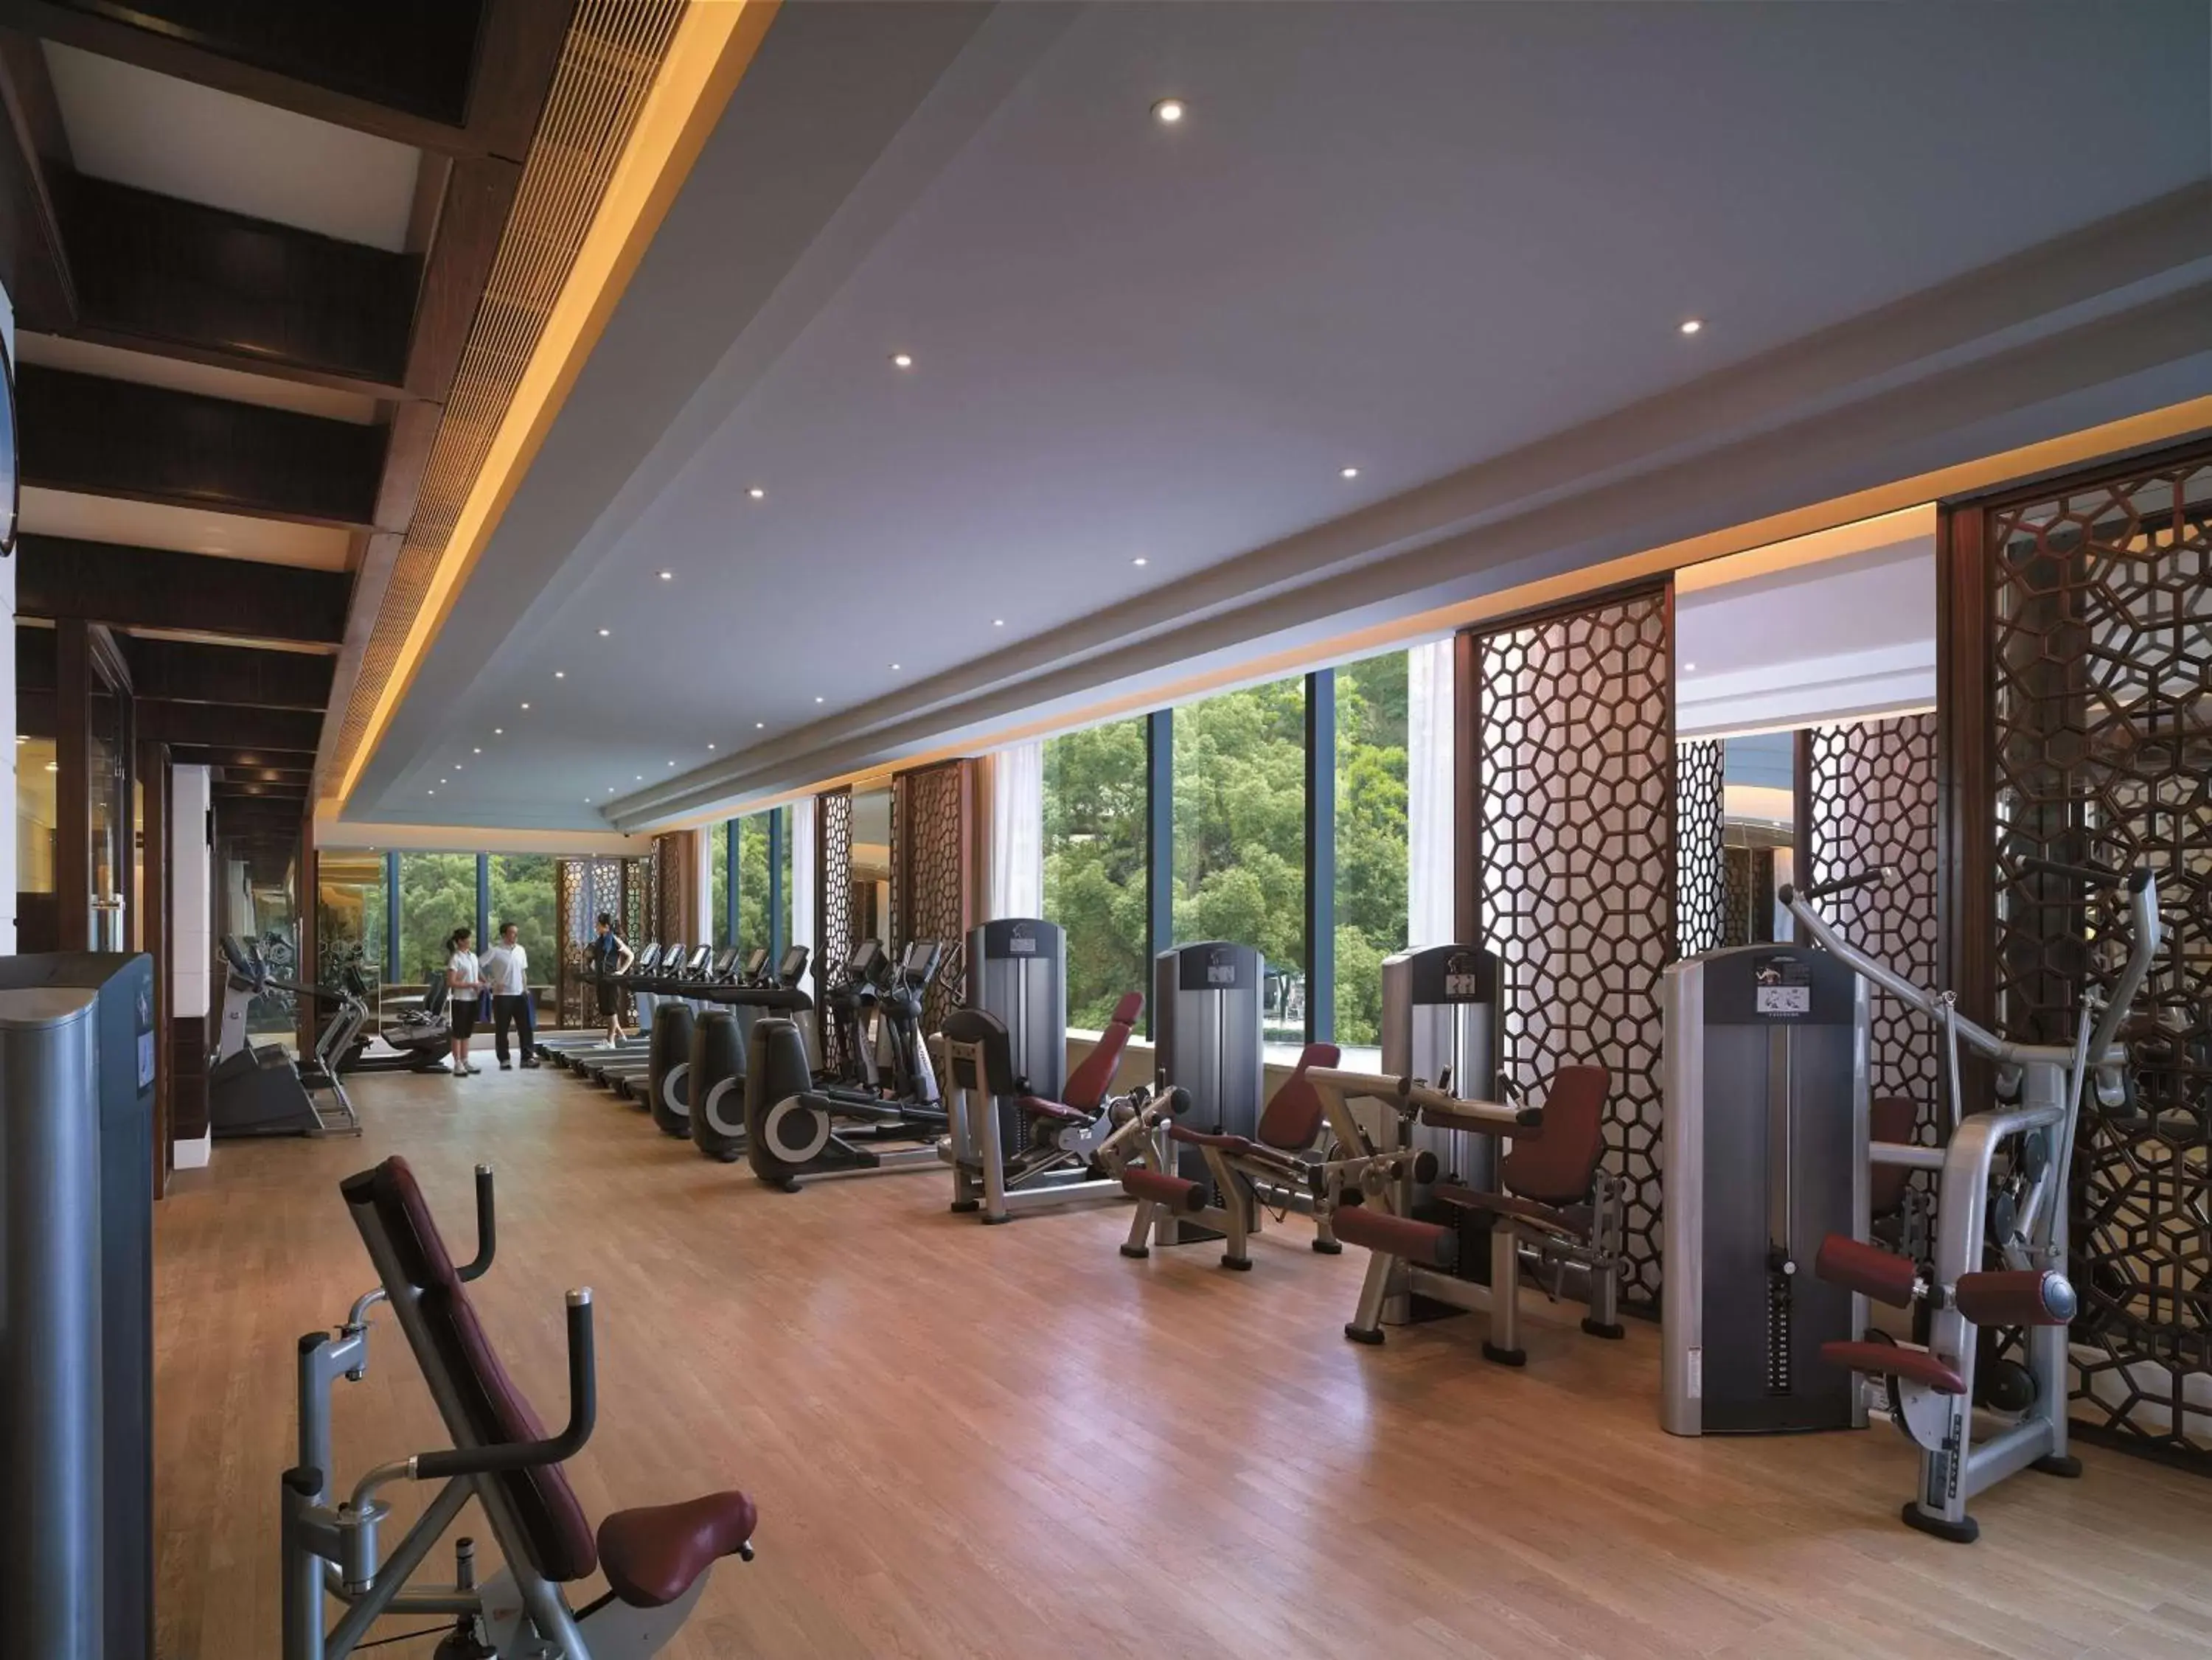 Fitness centre/facilities, Fitness Center/Facilities in Shangri-La Guilin